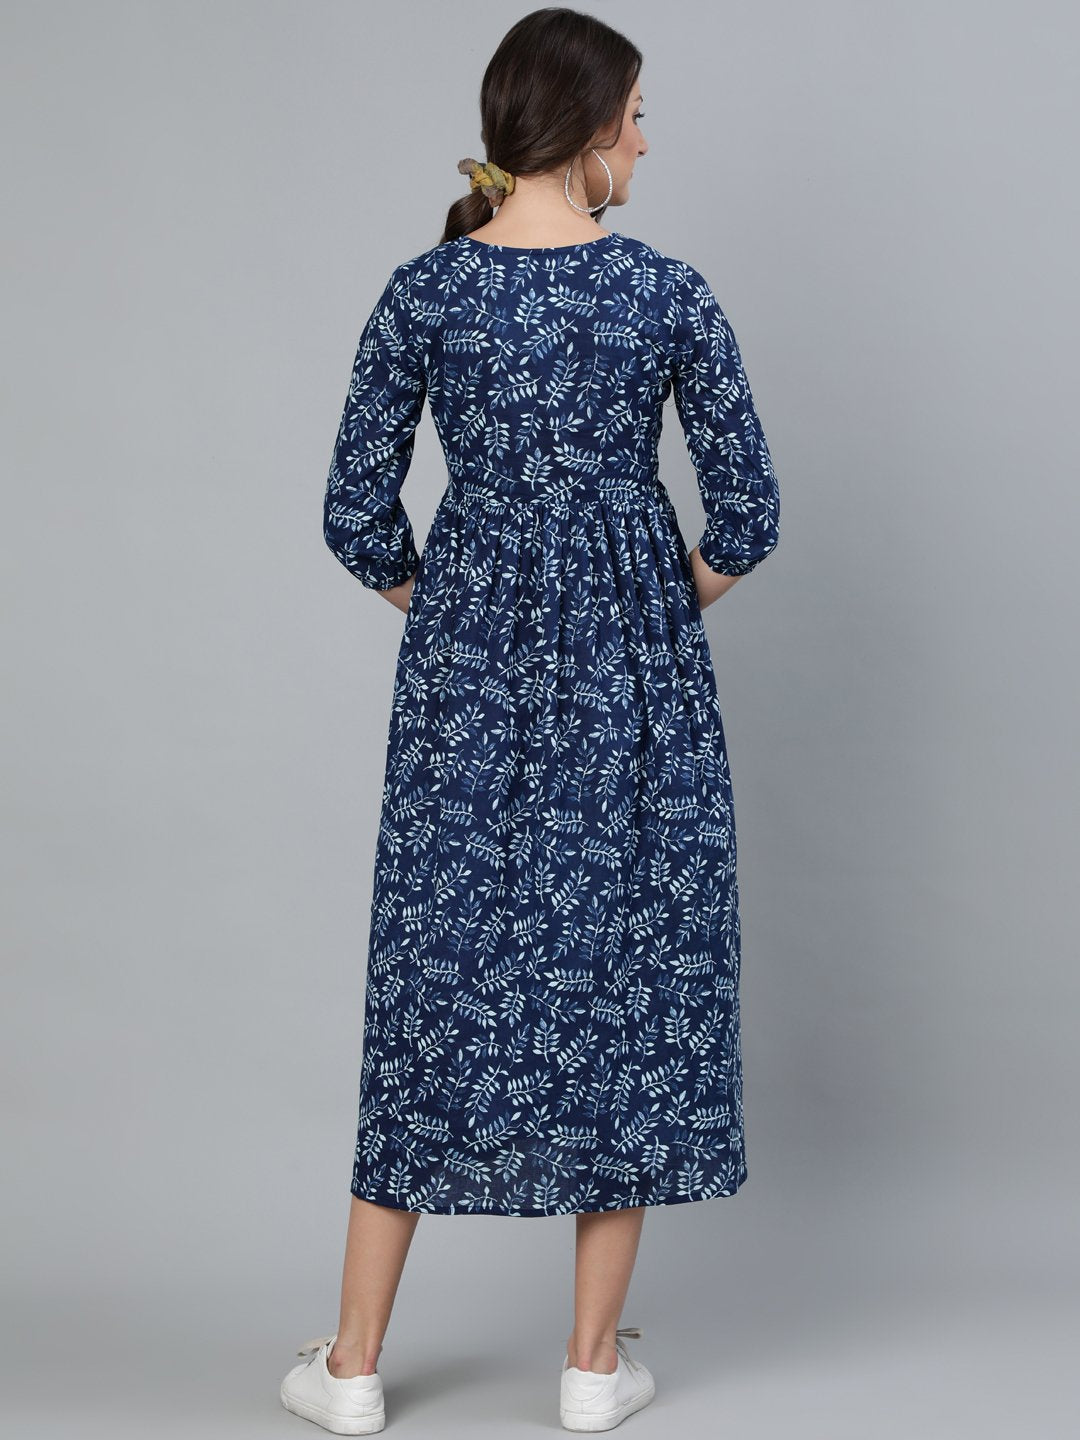 Women's Indigo Blue Printed Dress With Three Quarter Sleeves - Nayo Clothing